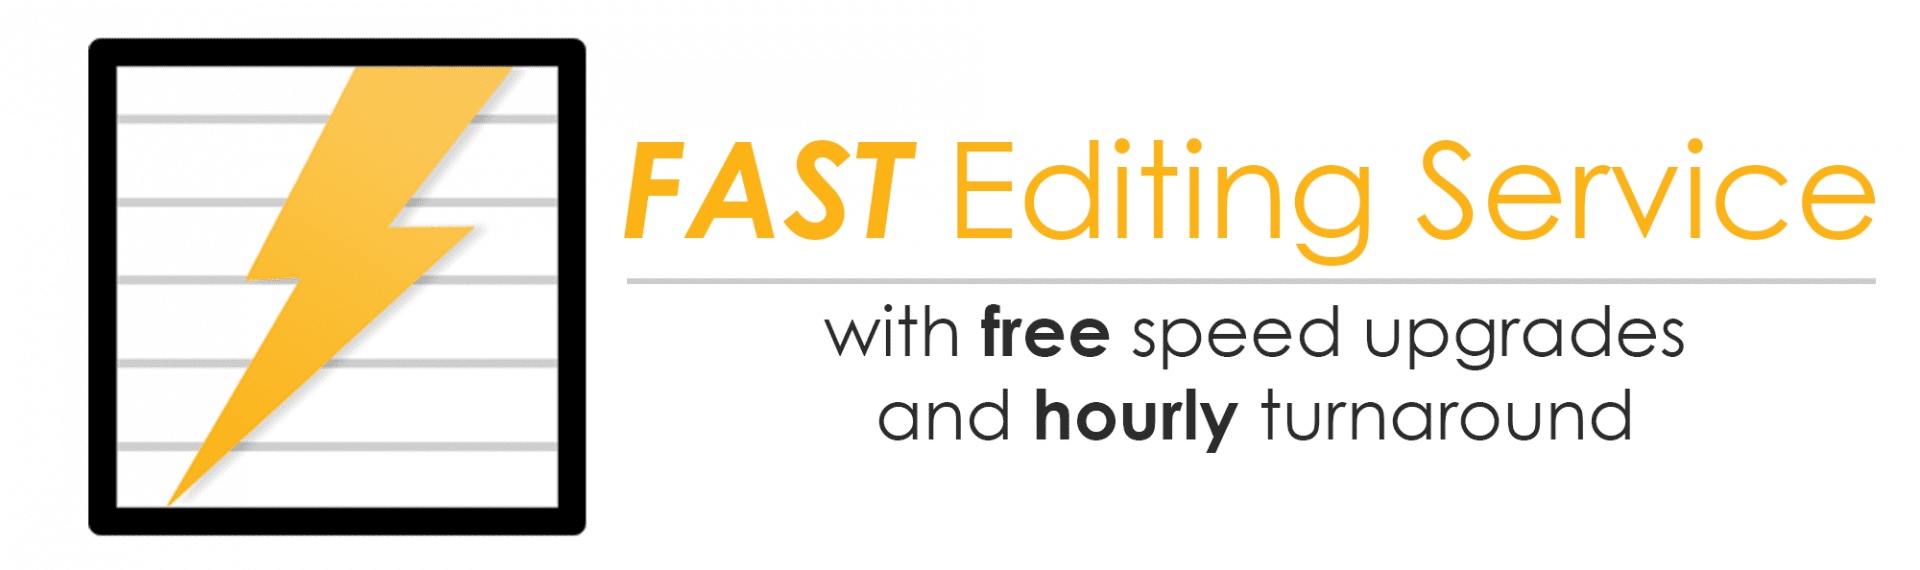 Fast Editing Service